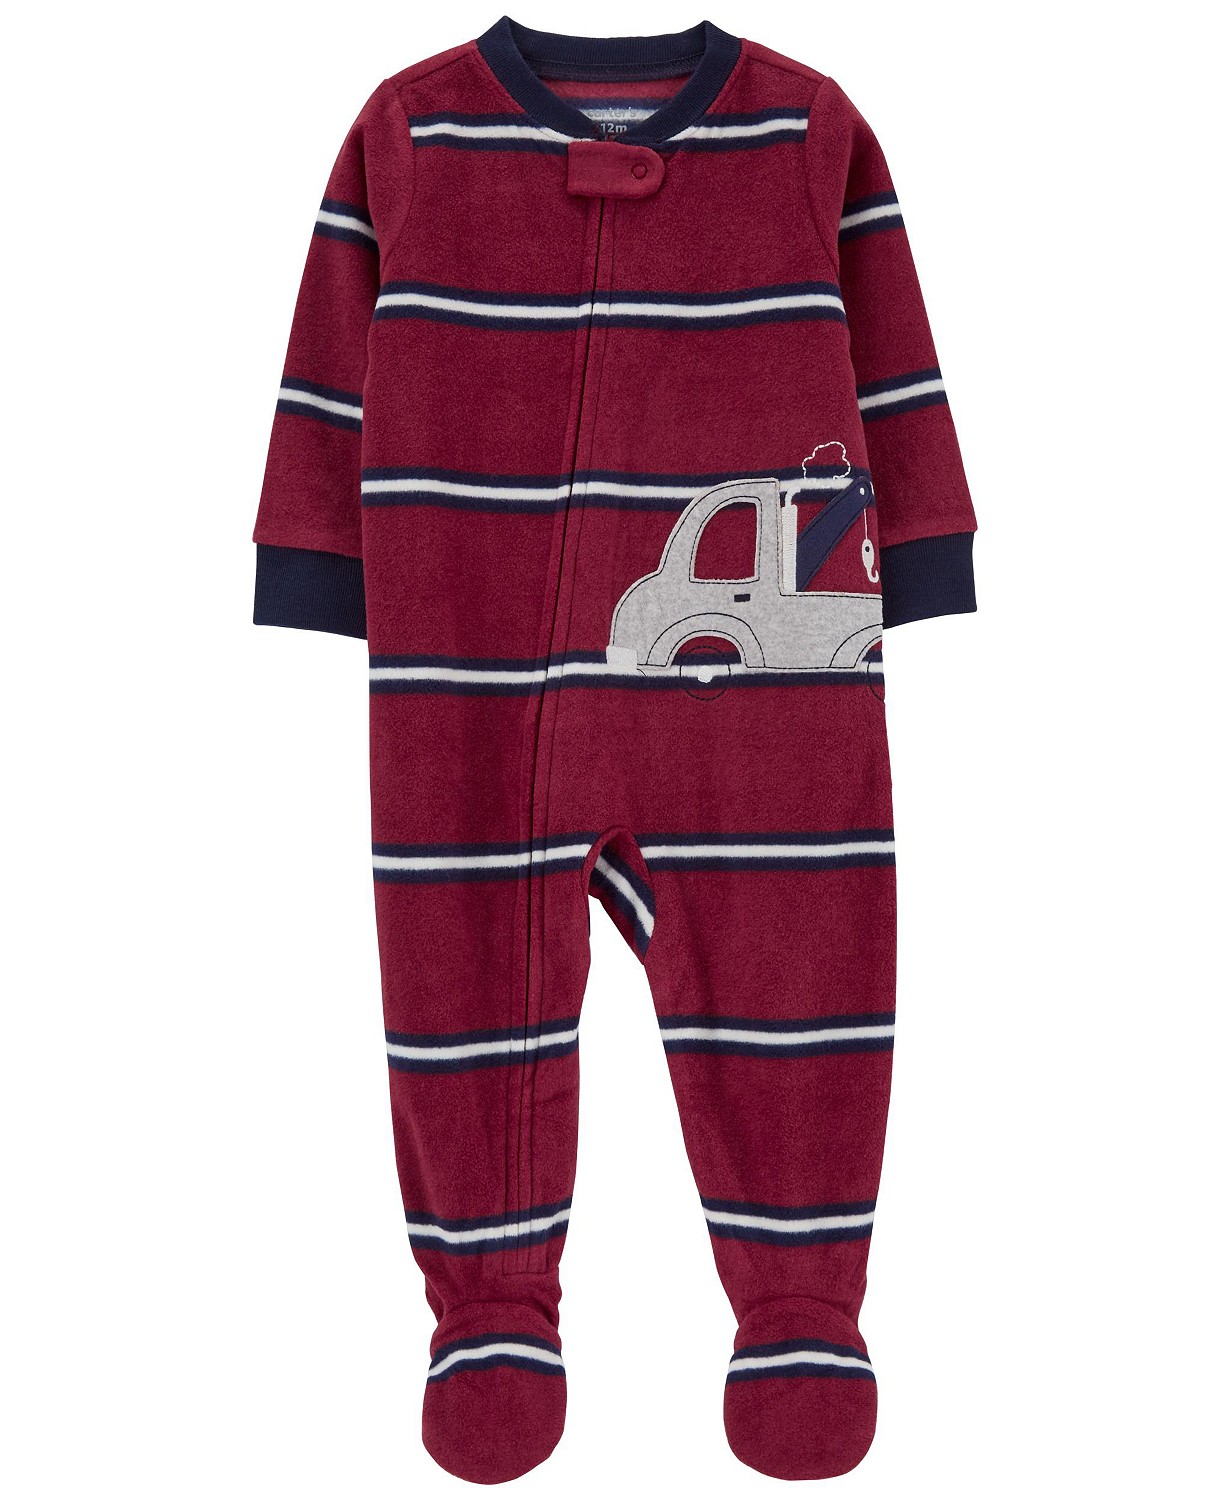 Toddler Boys One-Piece Fleece Footie Pajama